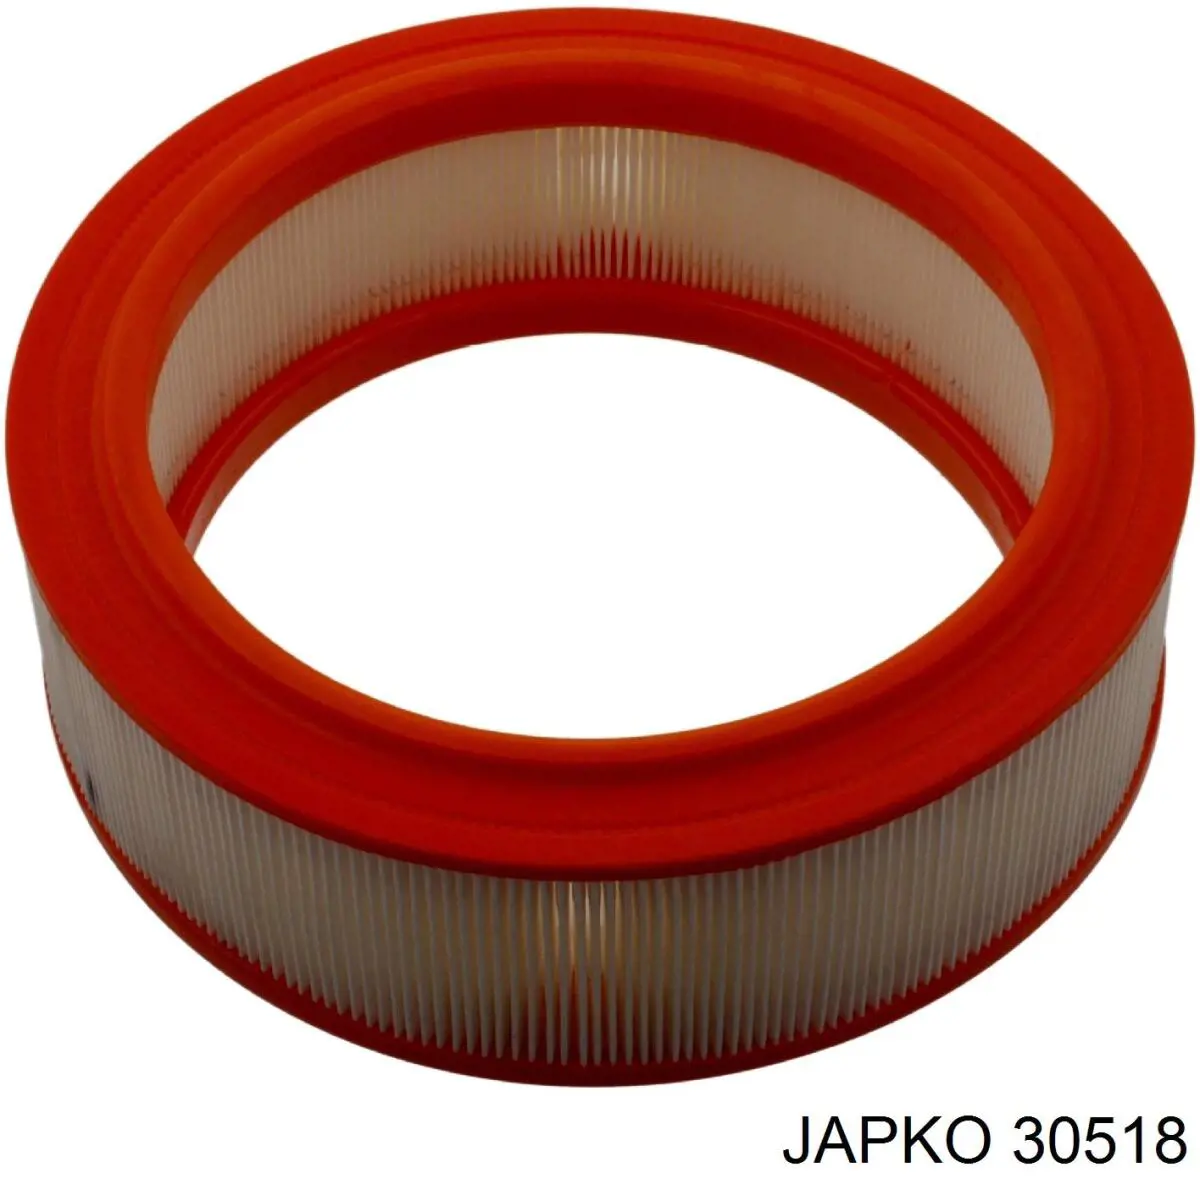 30518 Japko filtro de combustible